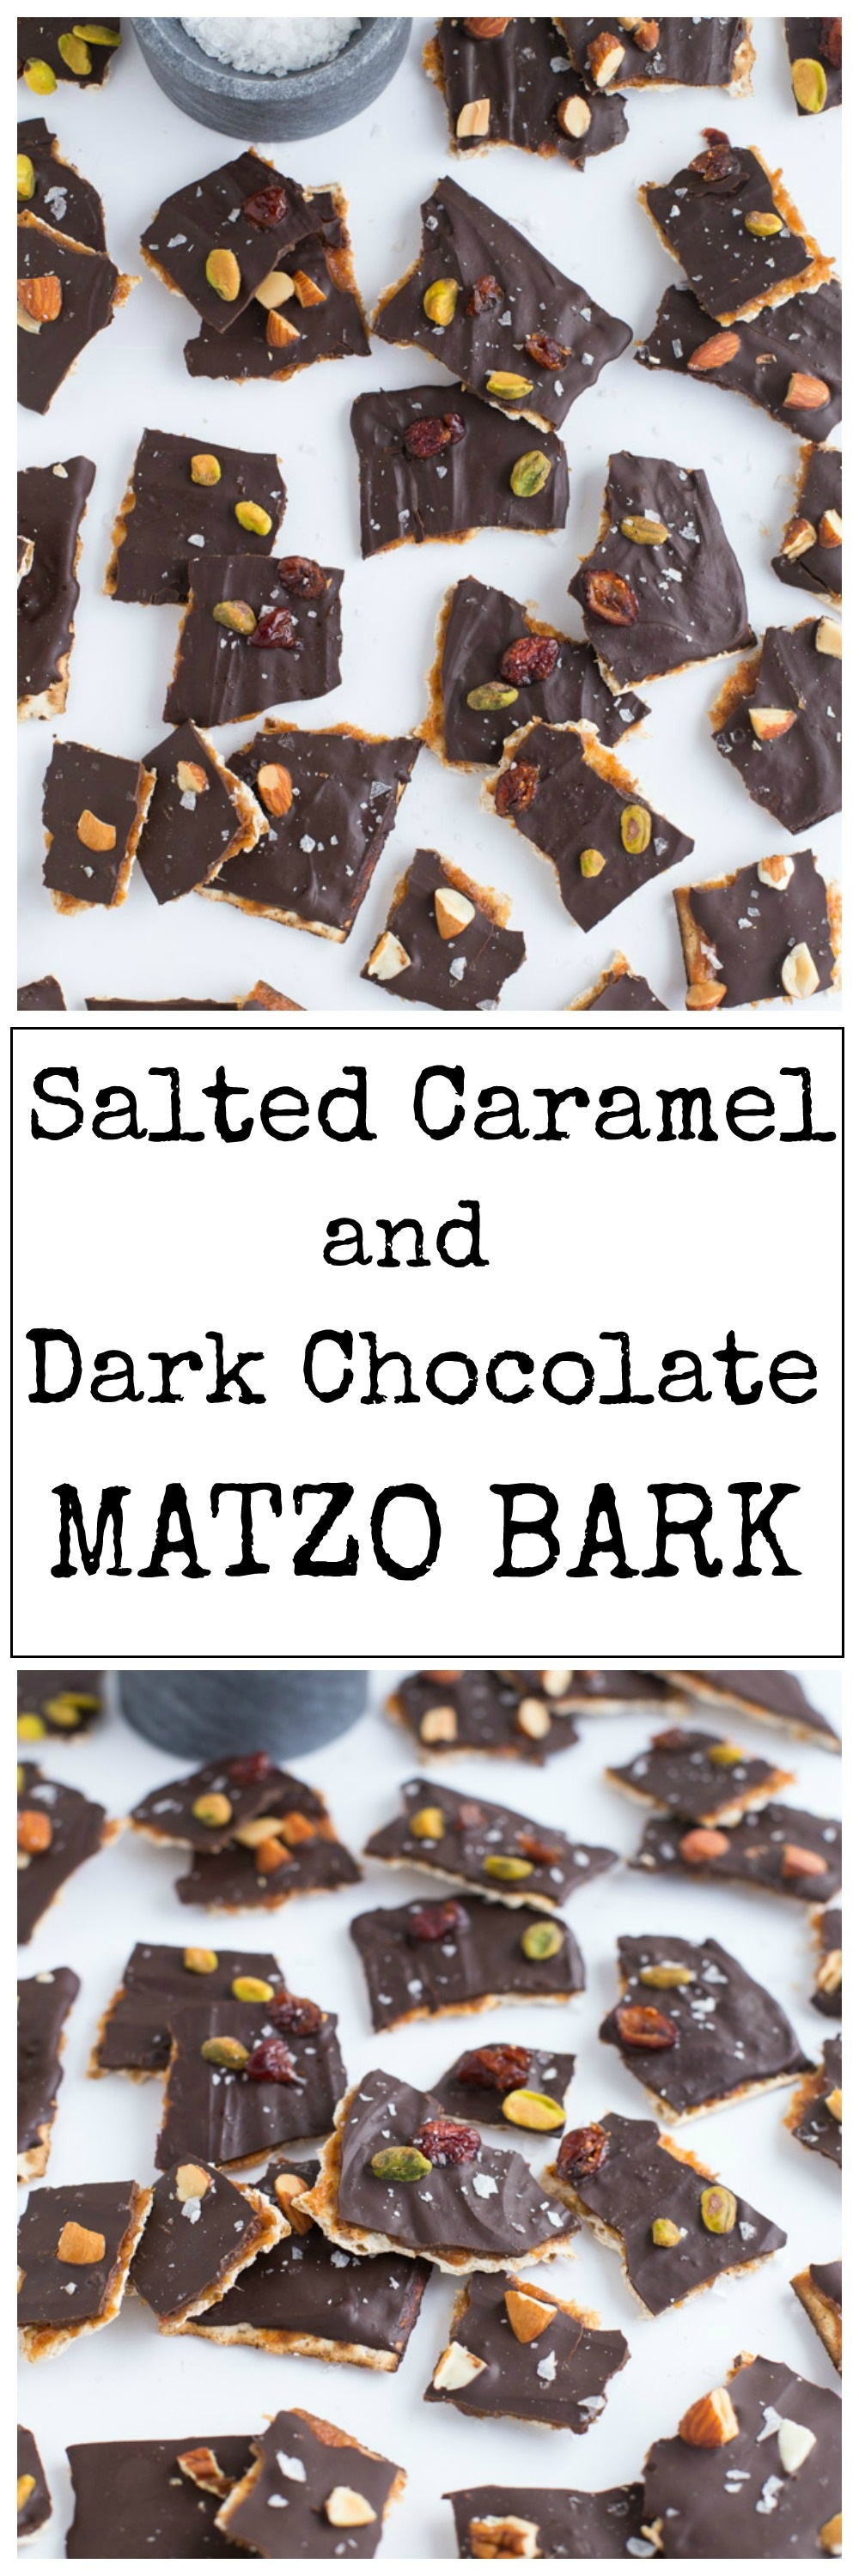 Salted Caramel and Dark Chocolate Matzo Bark